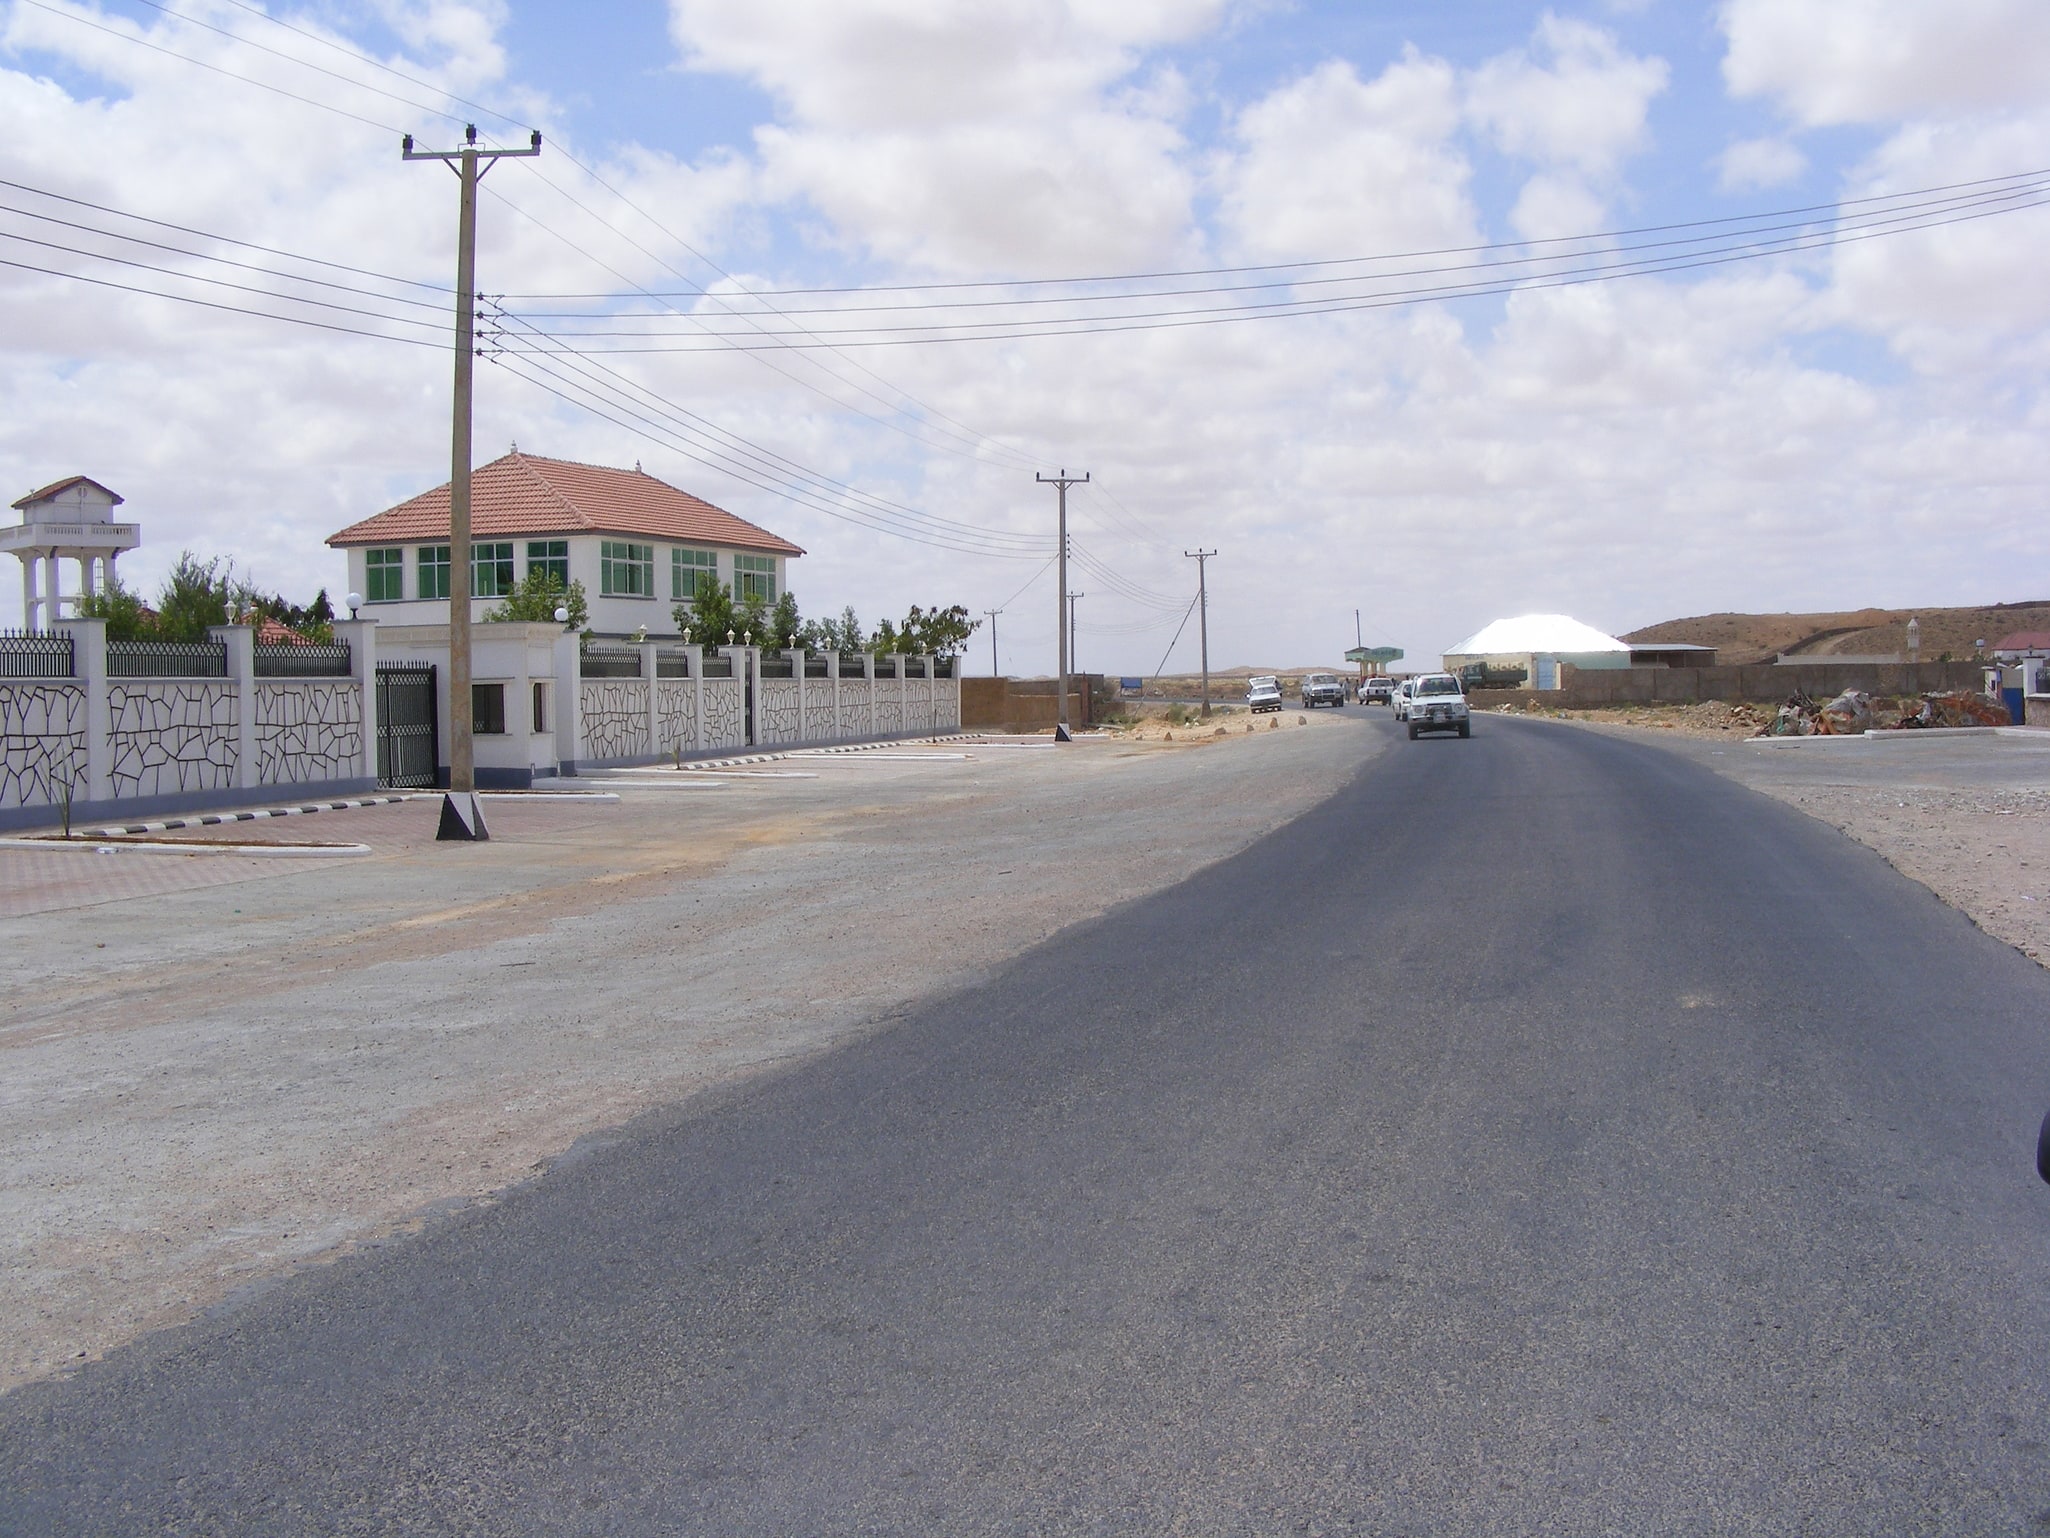 Garoowe, Somalia